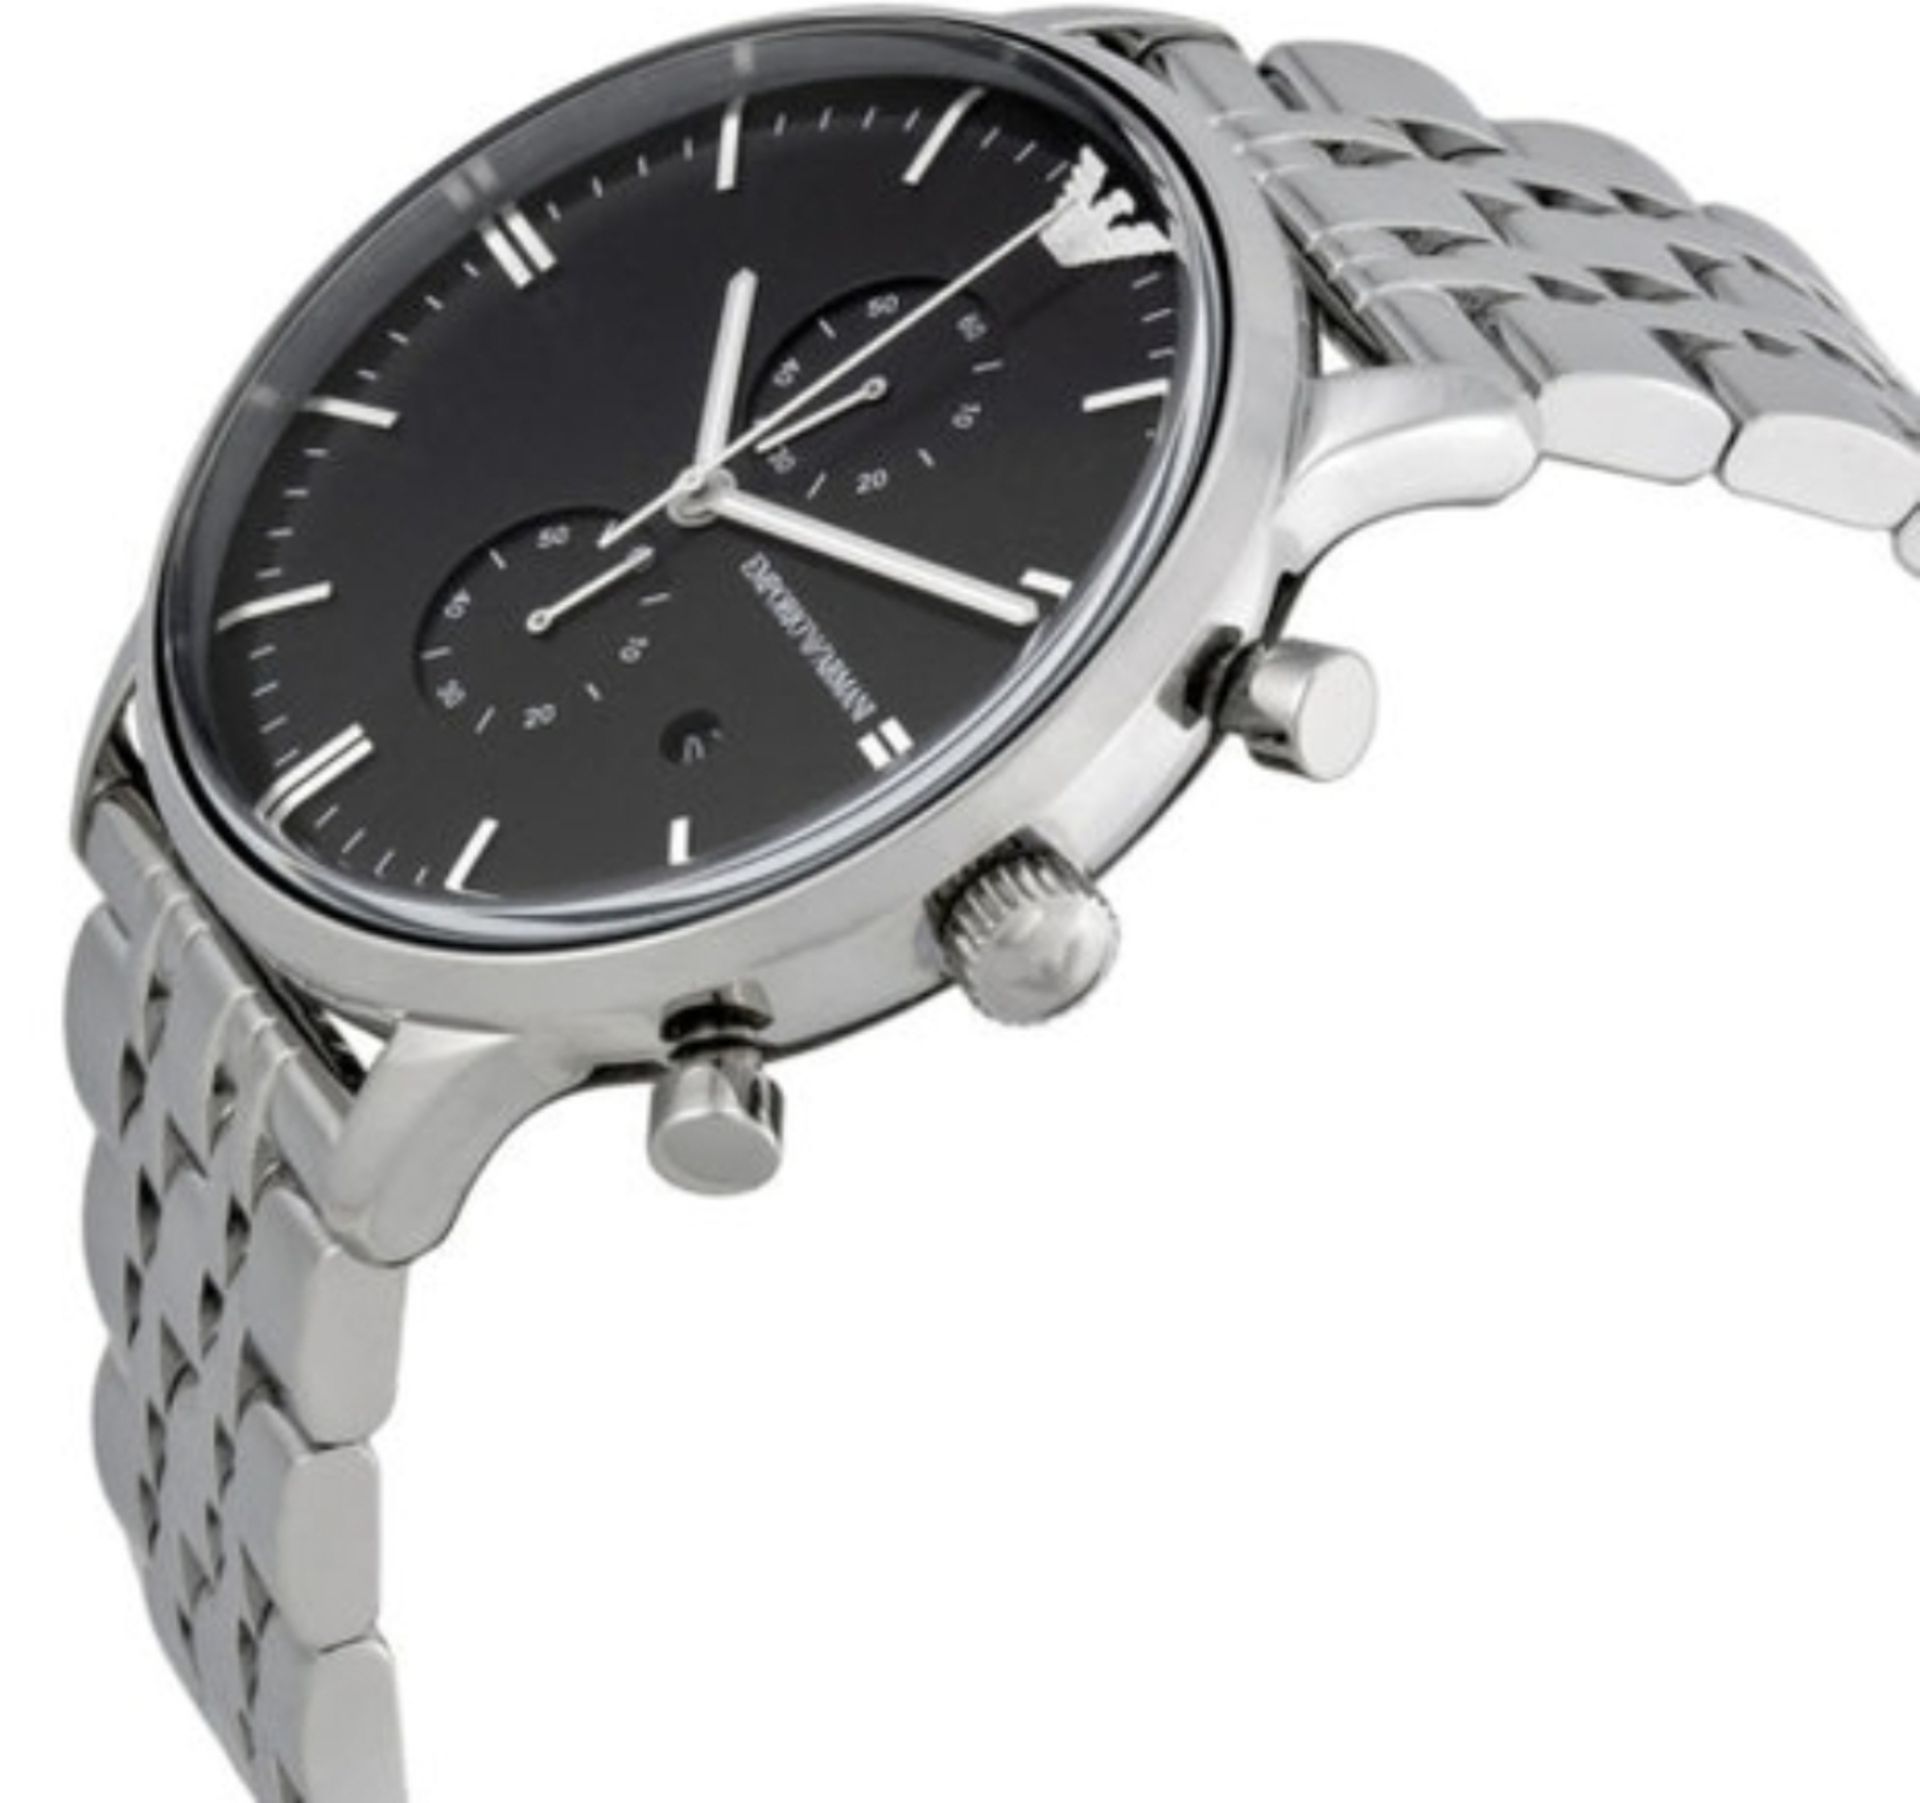 Emporio Armani AR0389 Men's Gianni Black Dial Silver Bracelet Chronograph Watch - Image 6 of 8